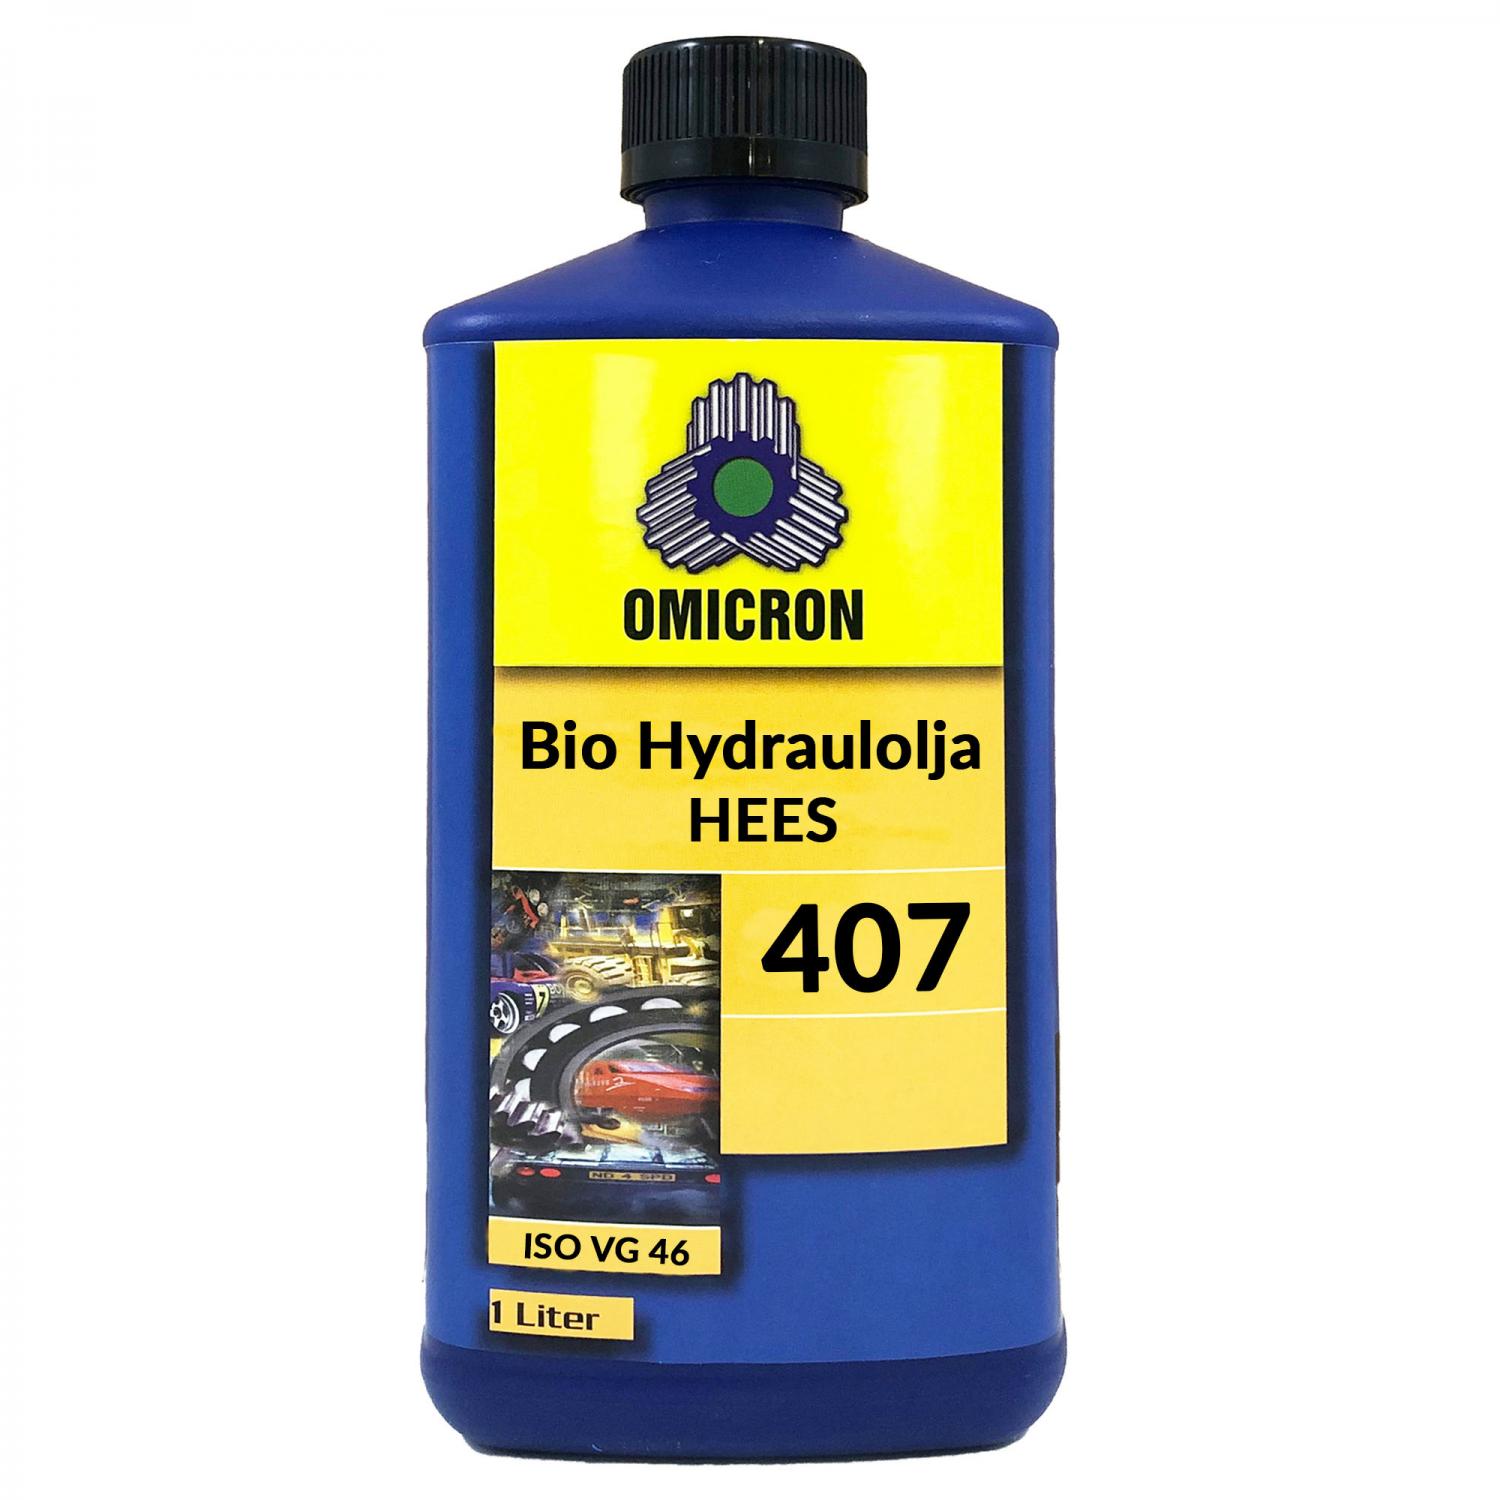 Omicron 407 BIO Hydraulolja HEES / ISO VG 46